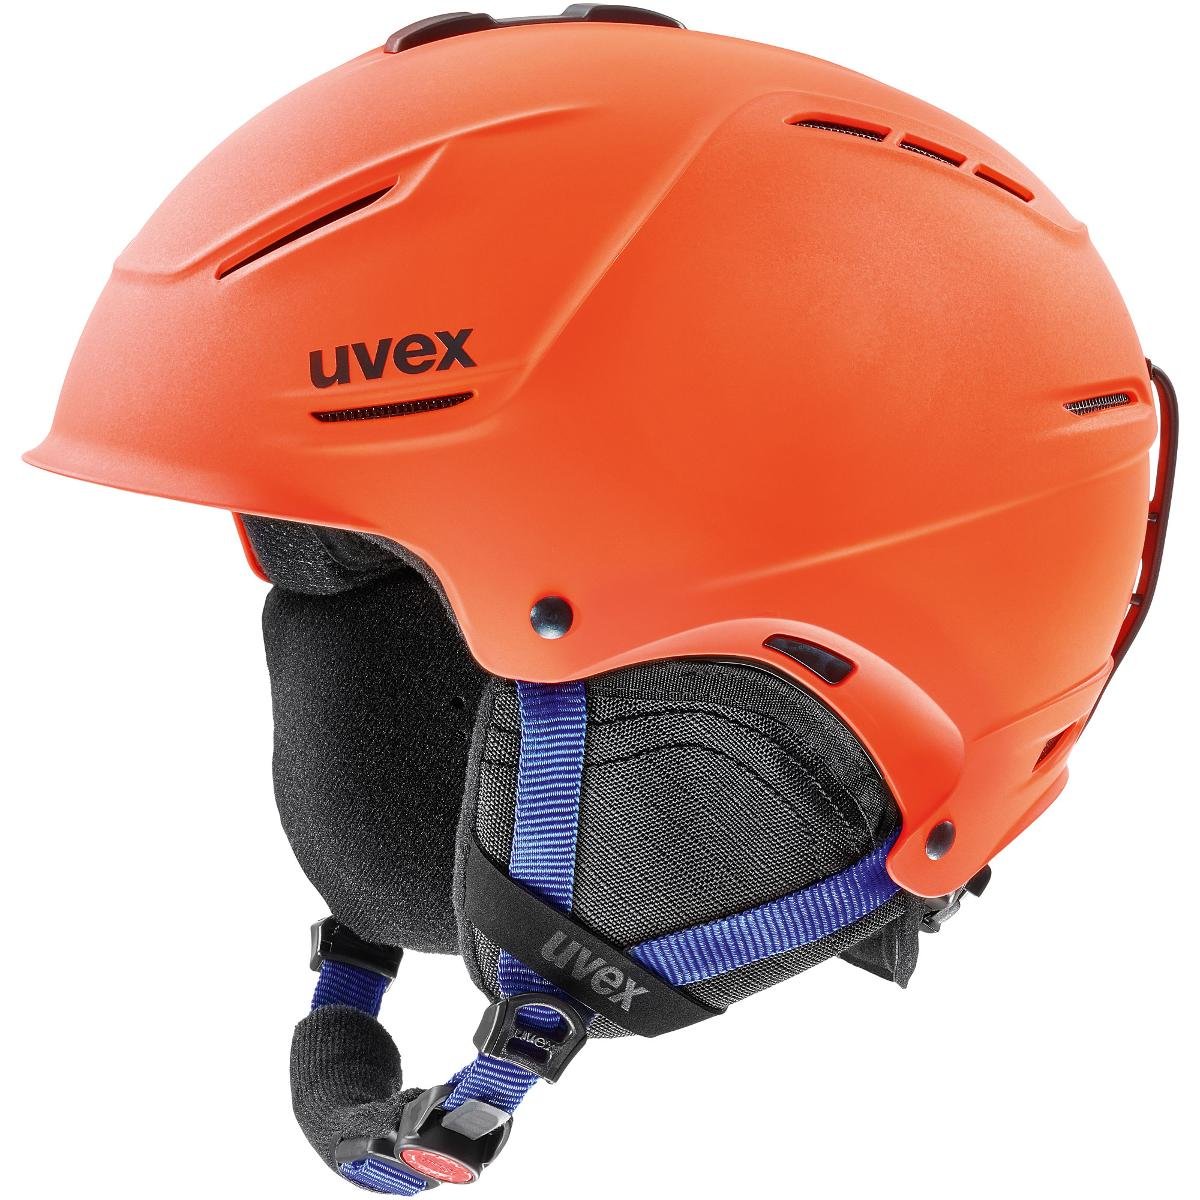 Uvex P1Us 2.0 Kask, orange-blue mat 52-55cm 2019 Kaski narciarskie S5662118003